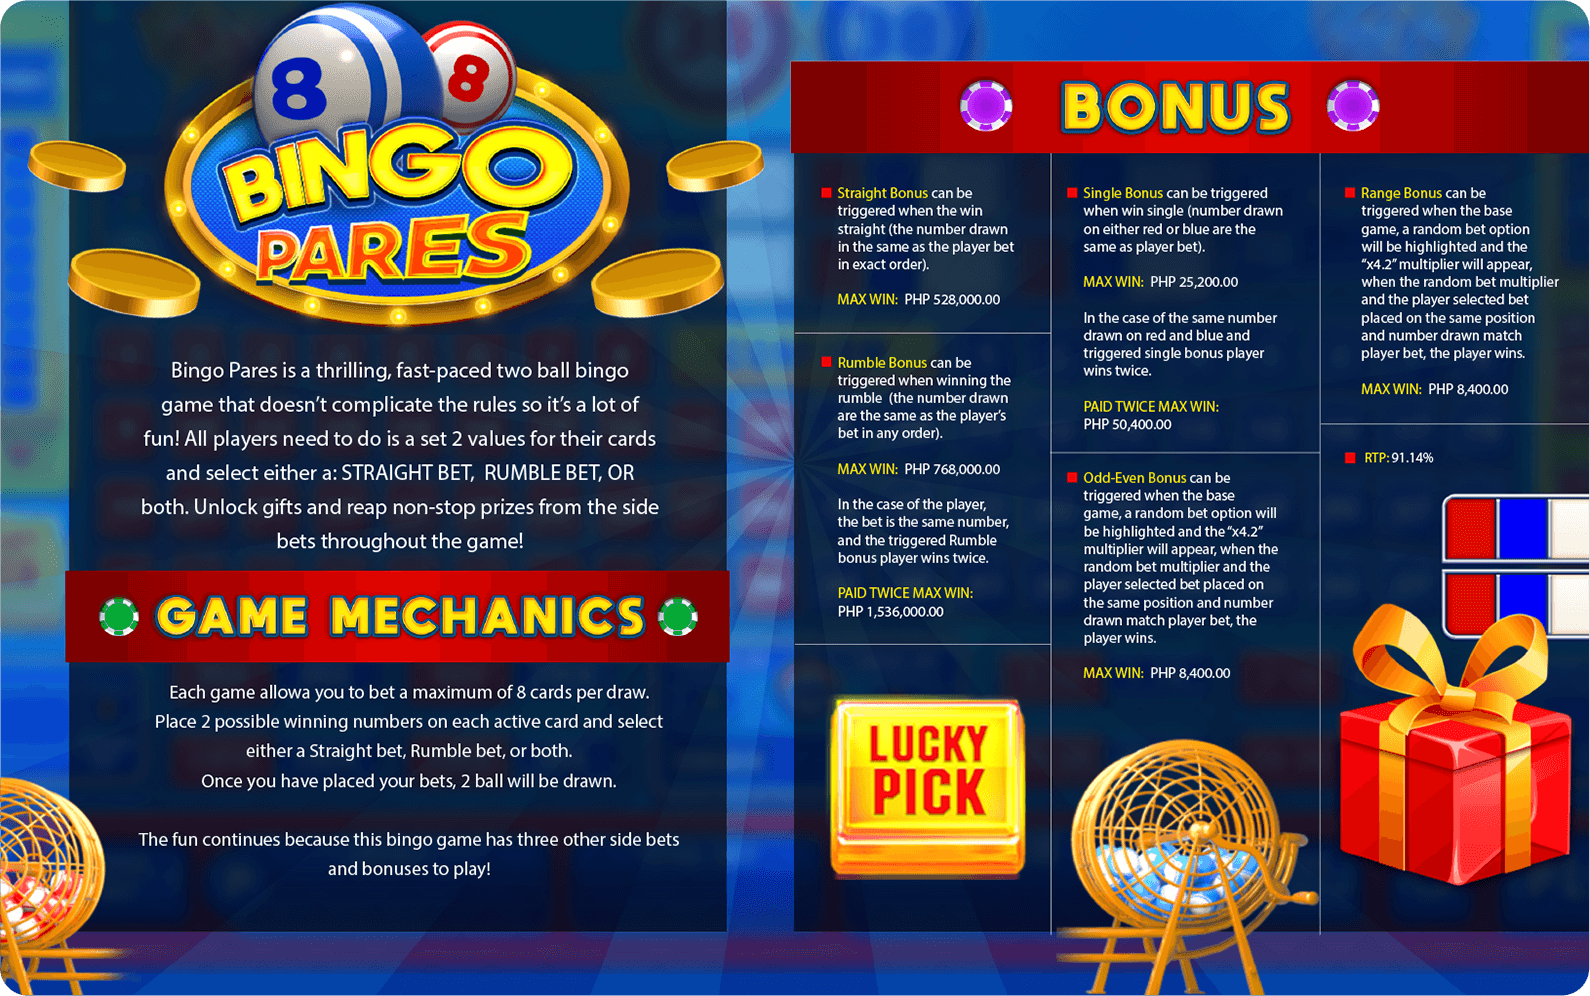 bingo-pares